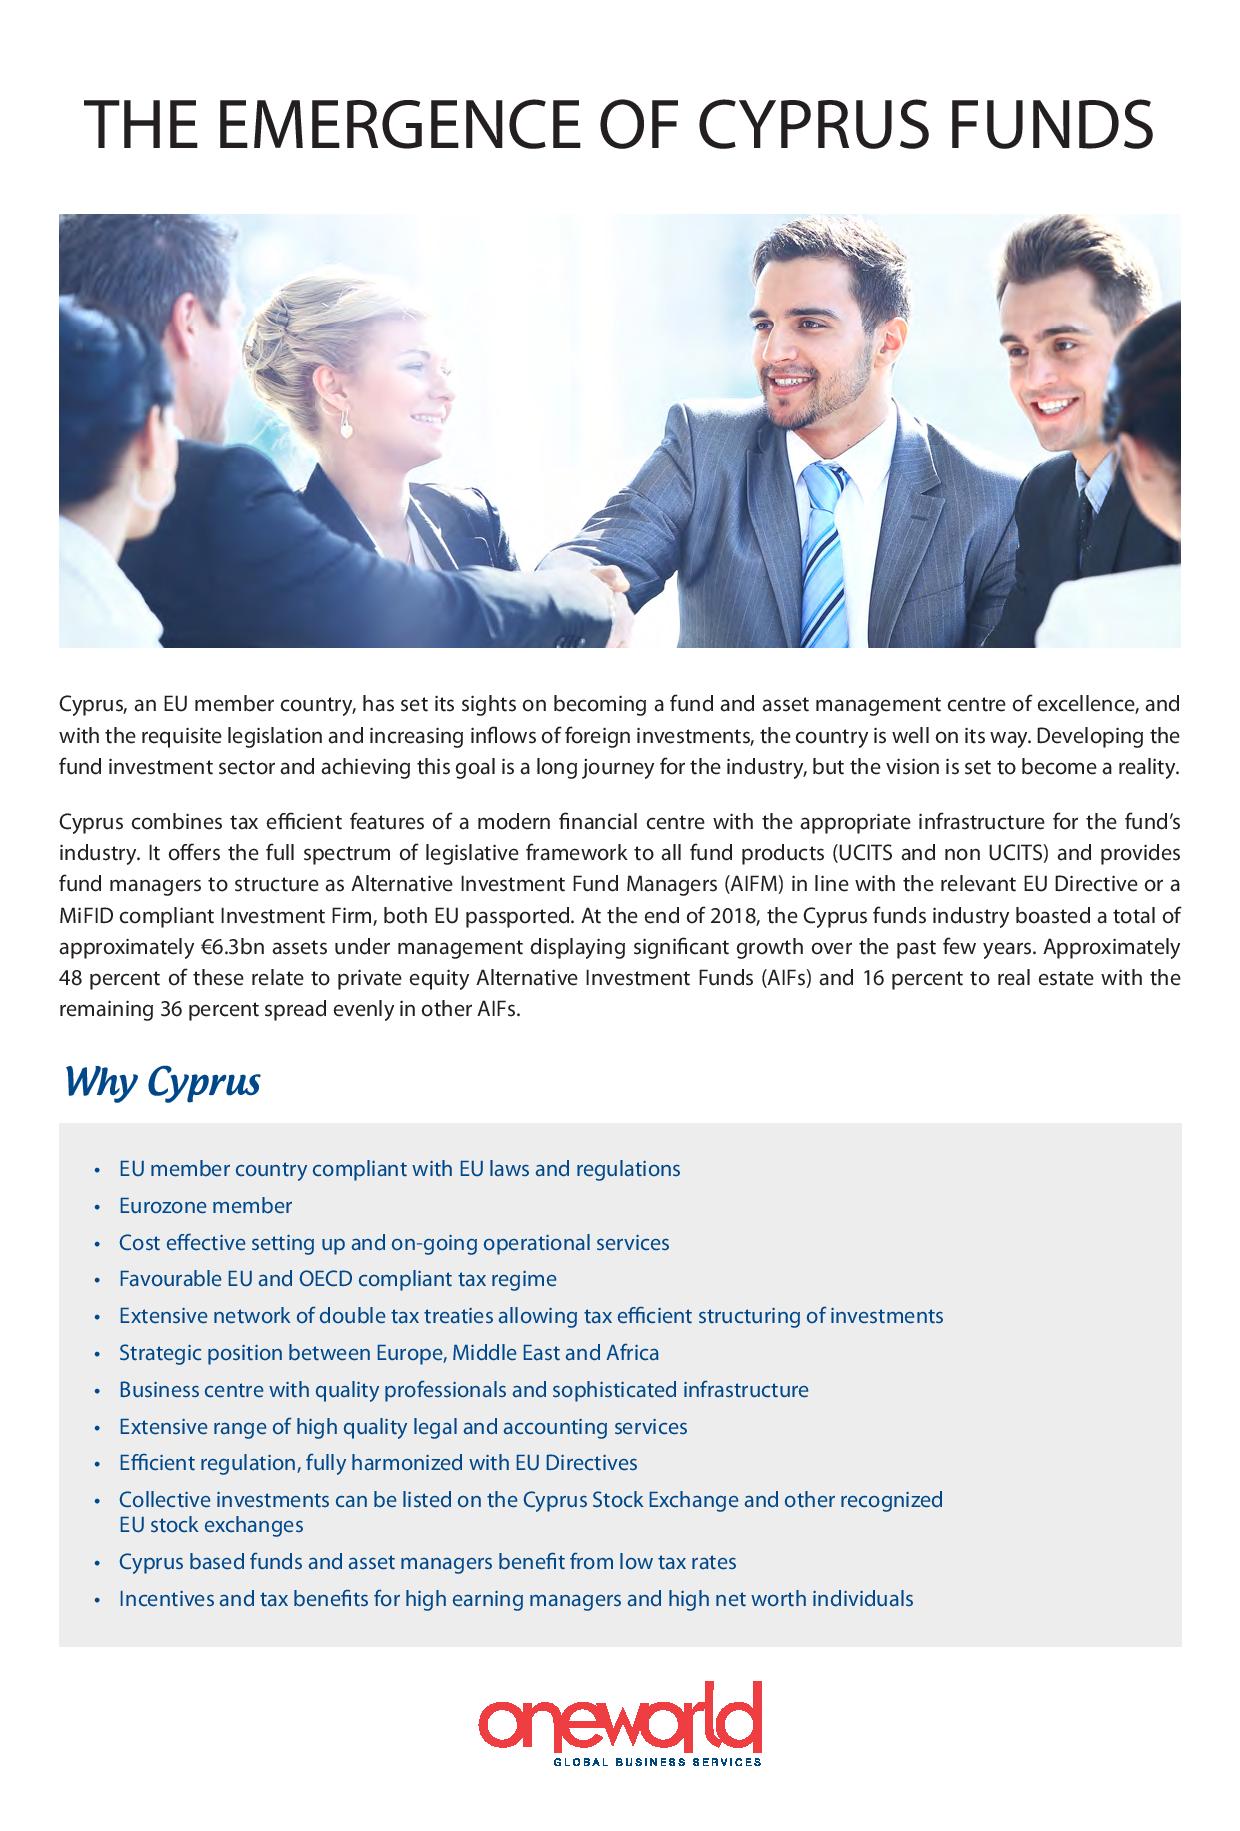 Oneworld Ltd: The Emergence of Cyprus Funds